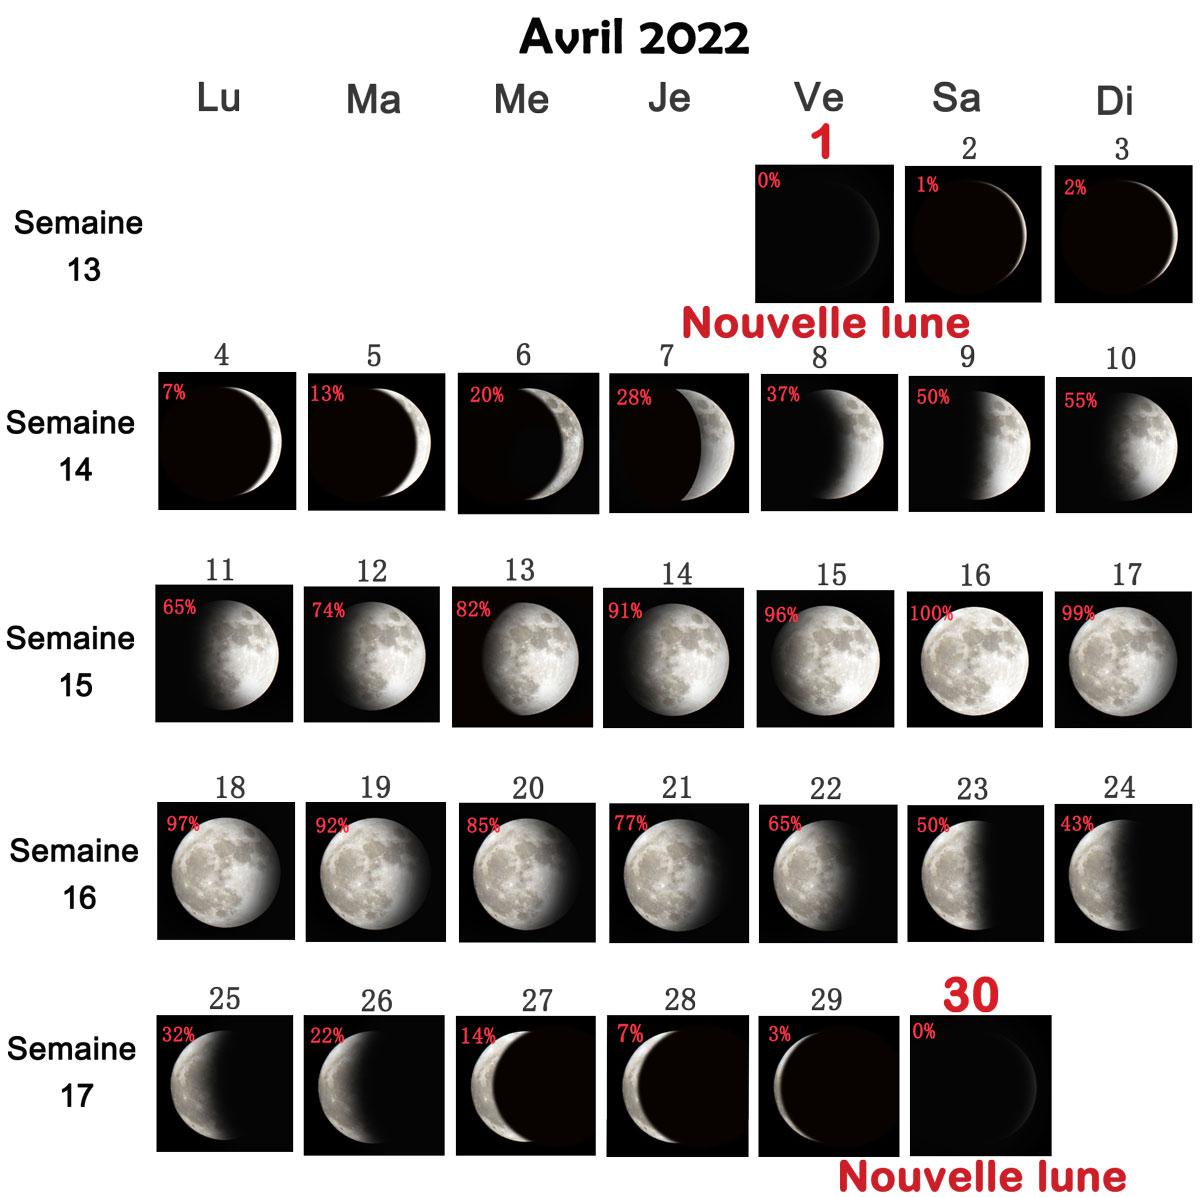 Начало растущей луны в апреле. Фазы Луны. Стадии Луны. Фазы Луны 2022. Календарь фаз Луны на 2022 год по месяцам.